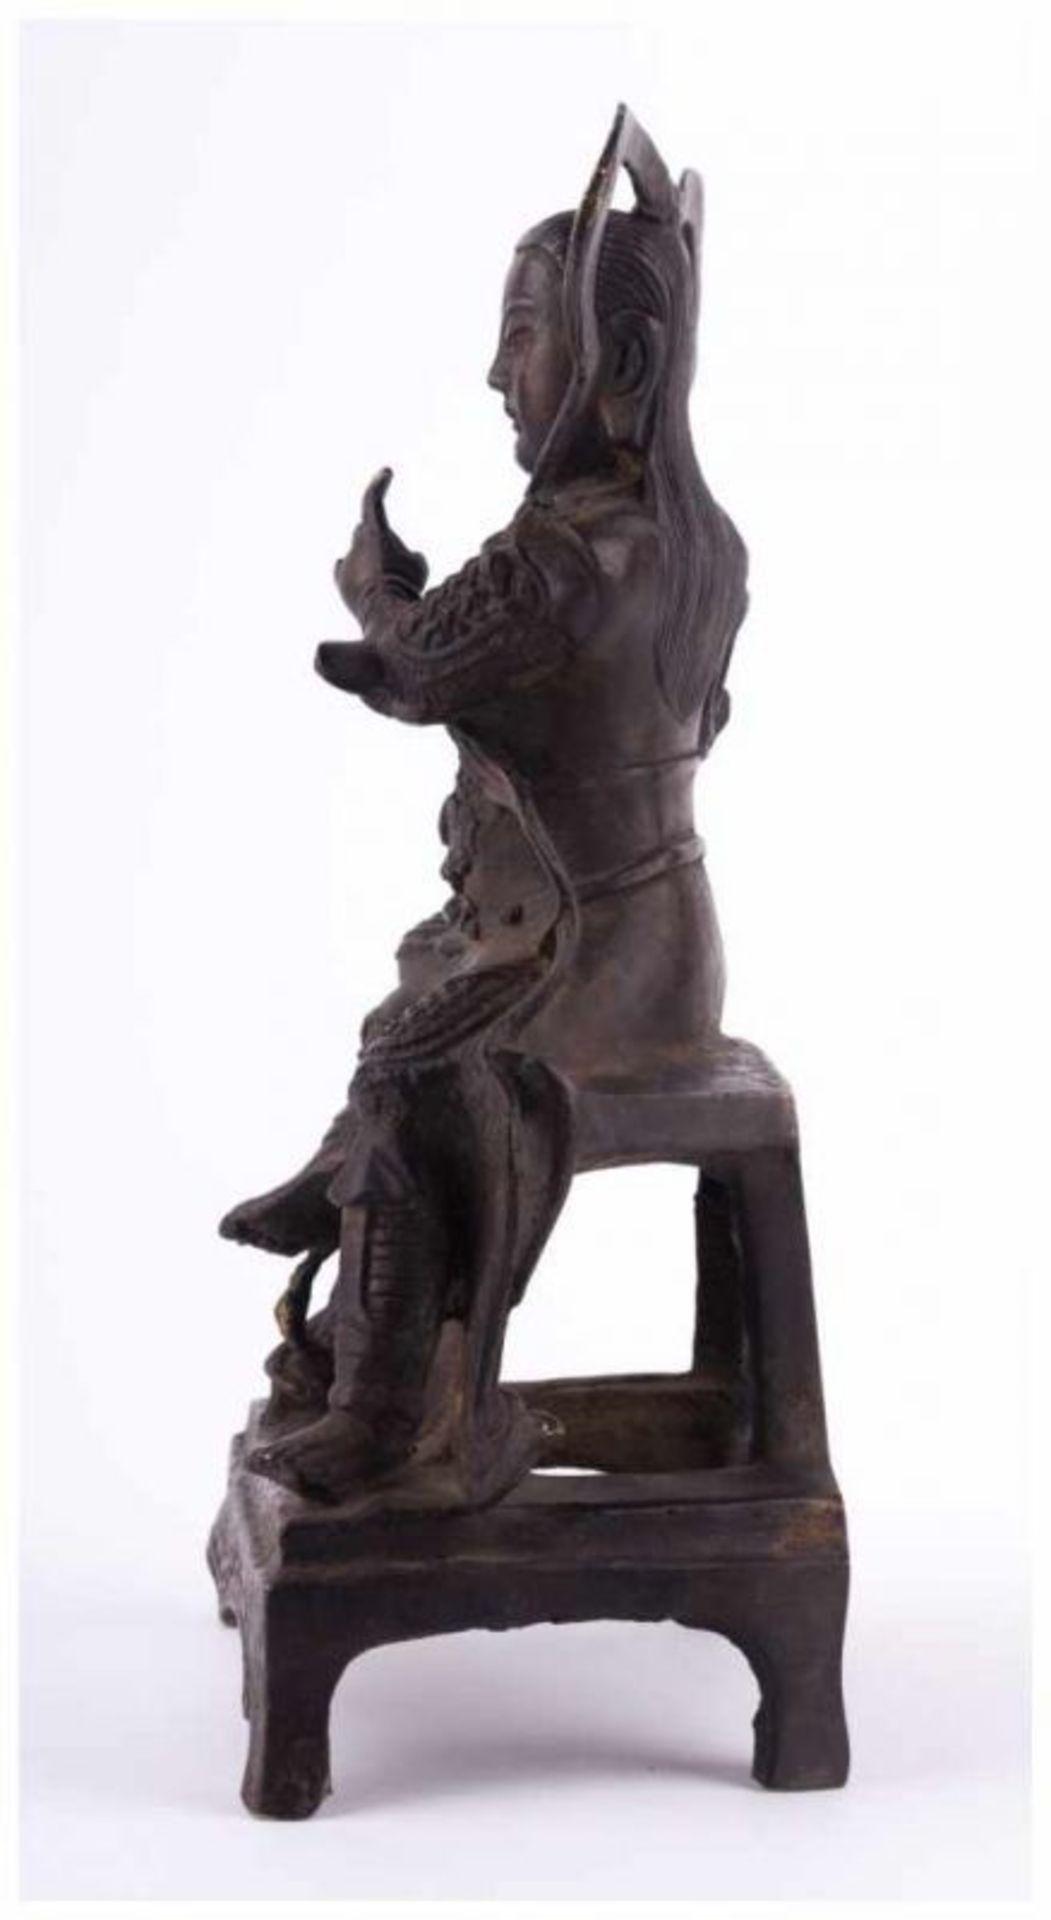 Alte Skulptur China / Old sculpture, China - Bronze, braun Patina mit Resten alter [...] - Image 4 of 14